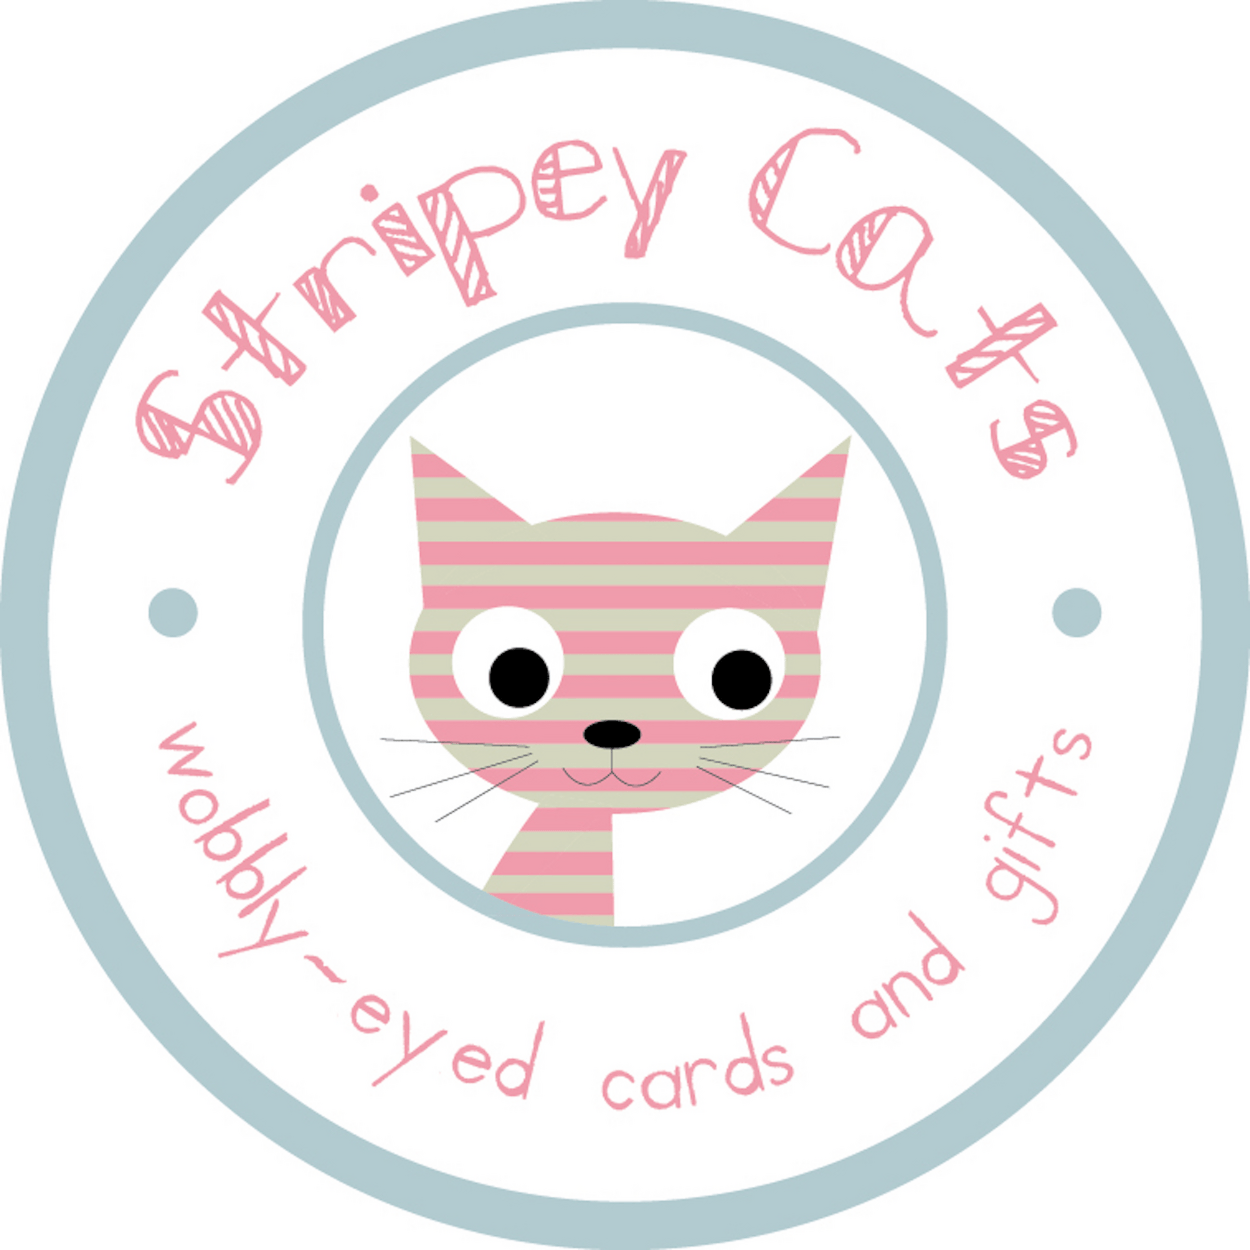 Stripey Cats Cards Ltd